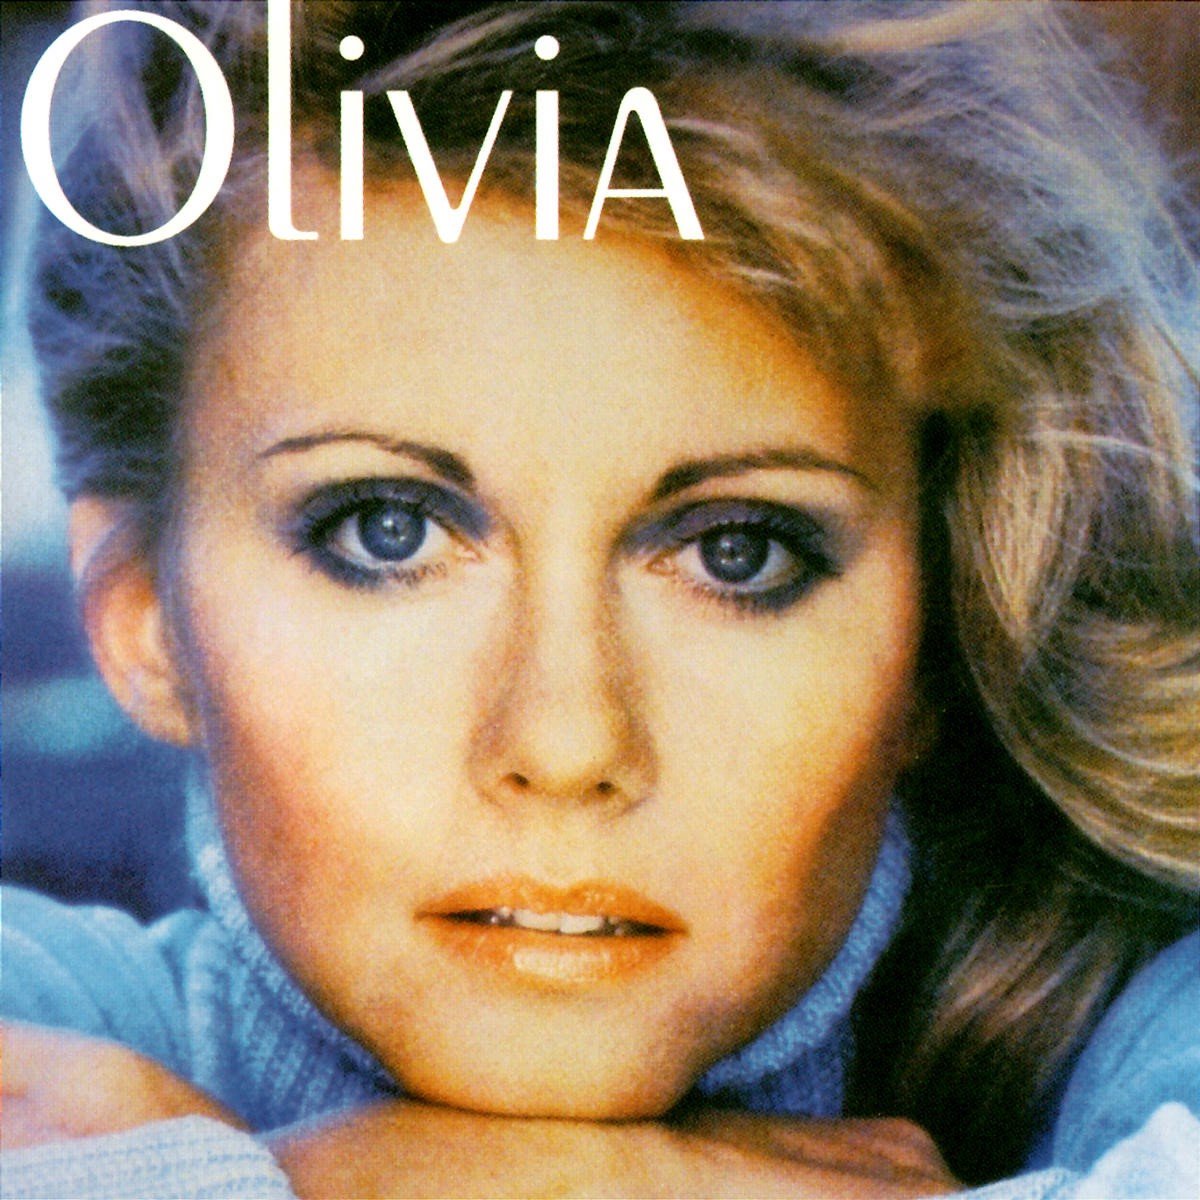 Olivia Newton-John - The Definitive Collection (CD) - Olivia Newton-John